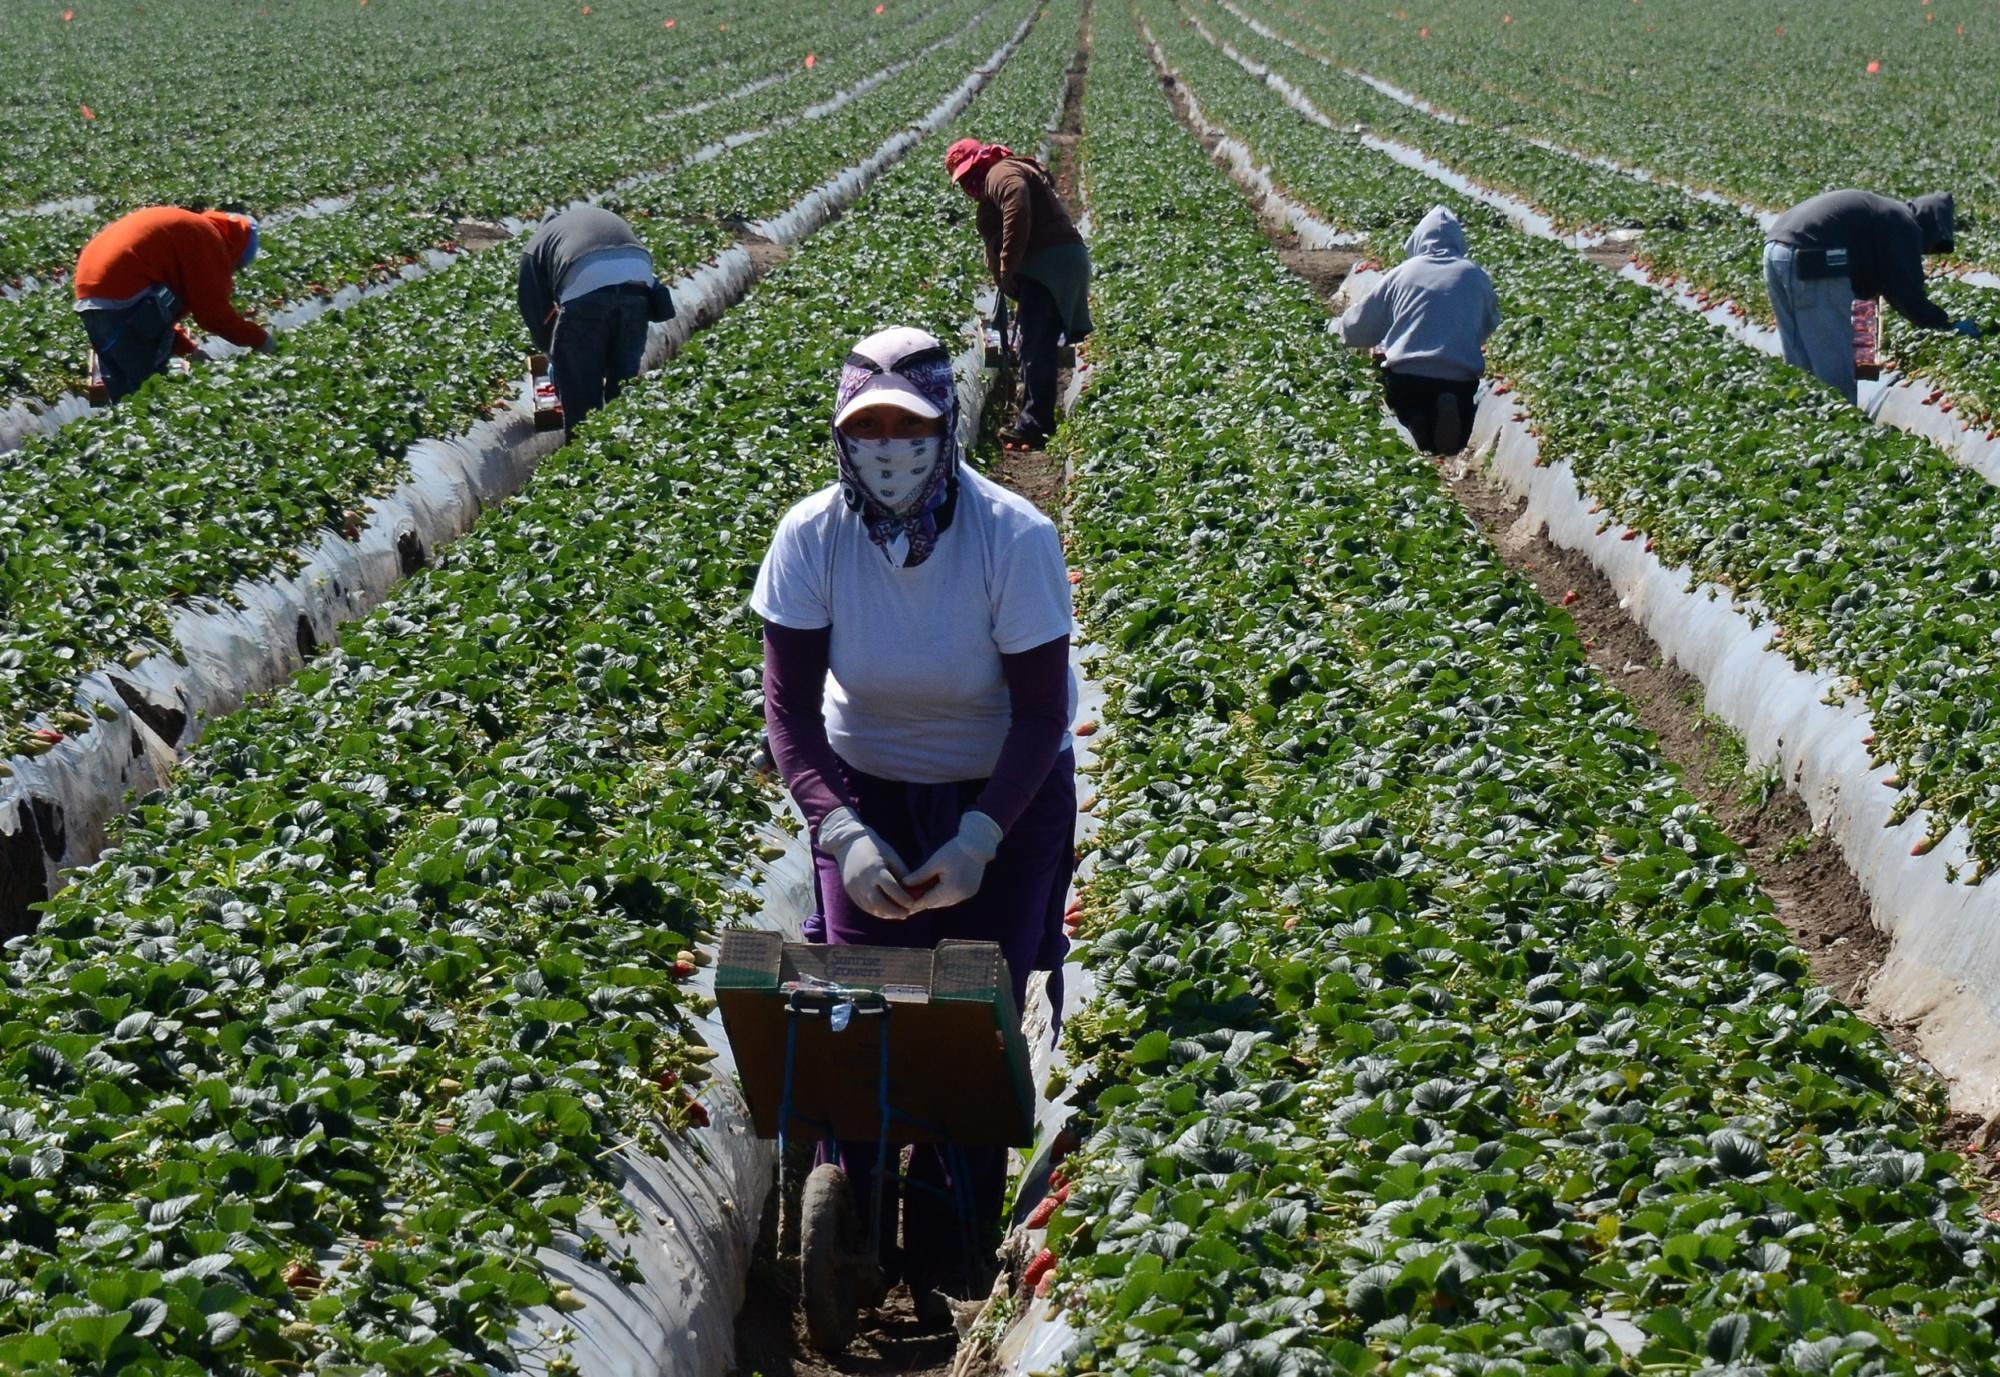 Farm workers harvest strawberries on March 13, 2013 near Oxnard, California. (Photo: Joe Klamar/AFP via Getty Images)